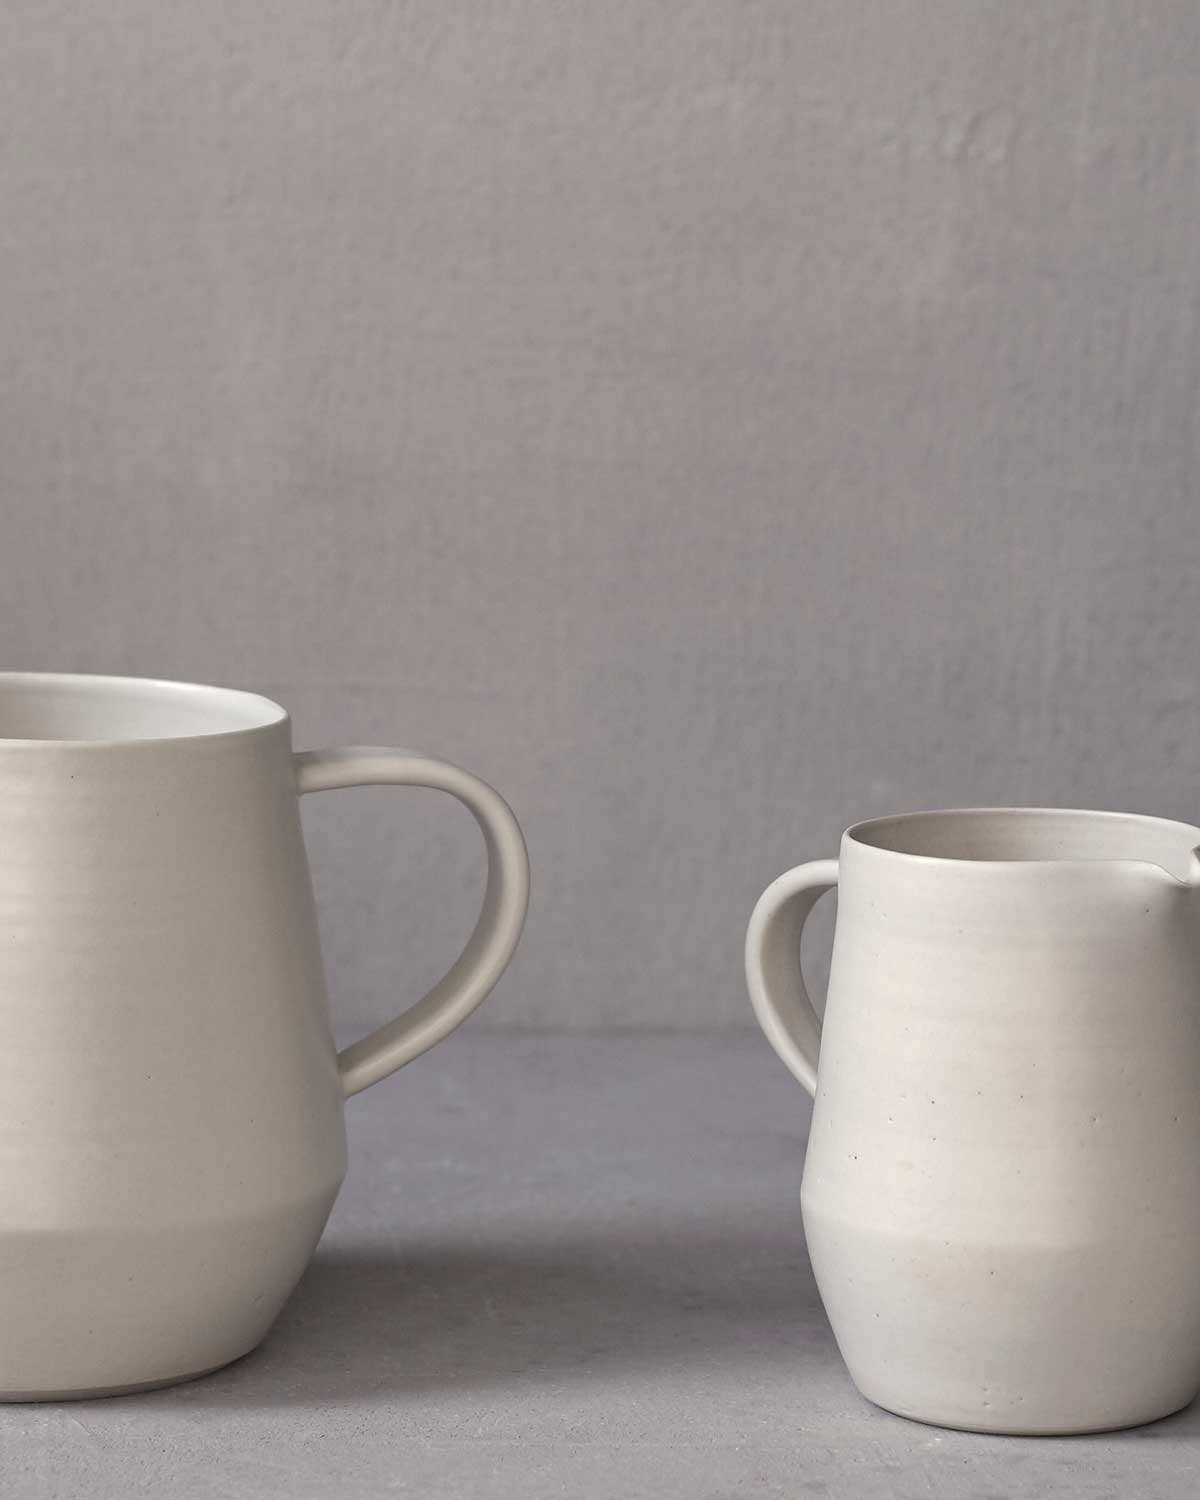 SAVEUR Gift Guides: Gorgeous Kitchen Ceramics We Love